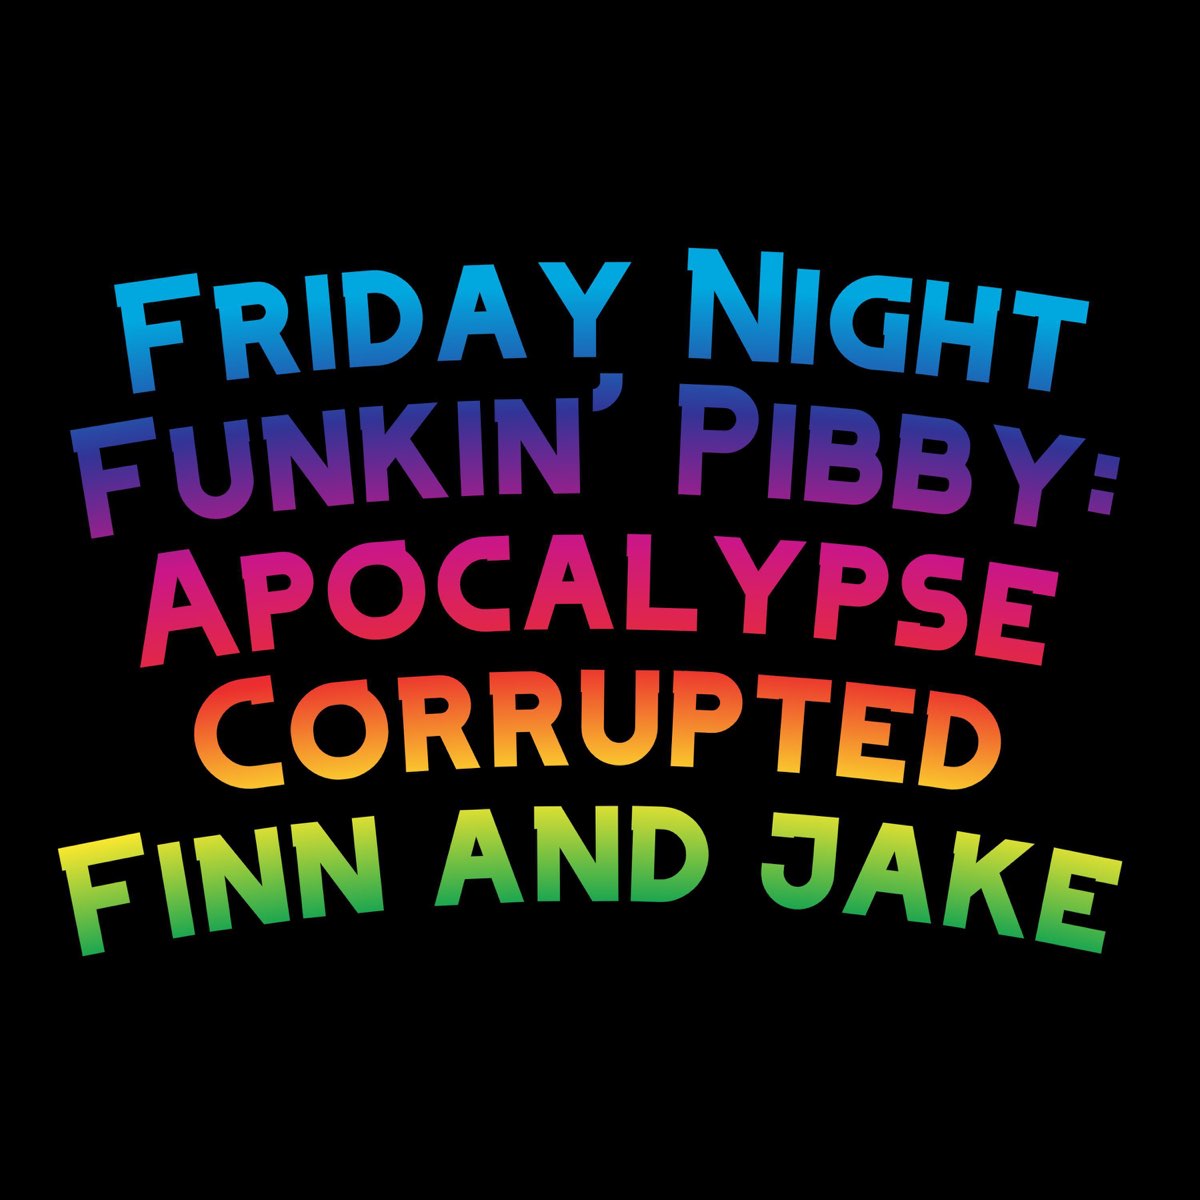 Friday Night Funkin' Pibby Corrupted Full Week